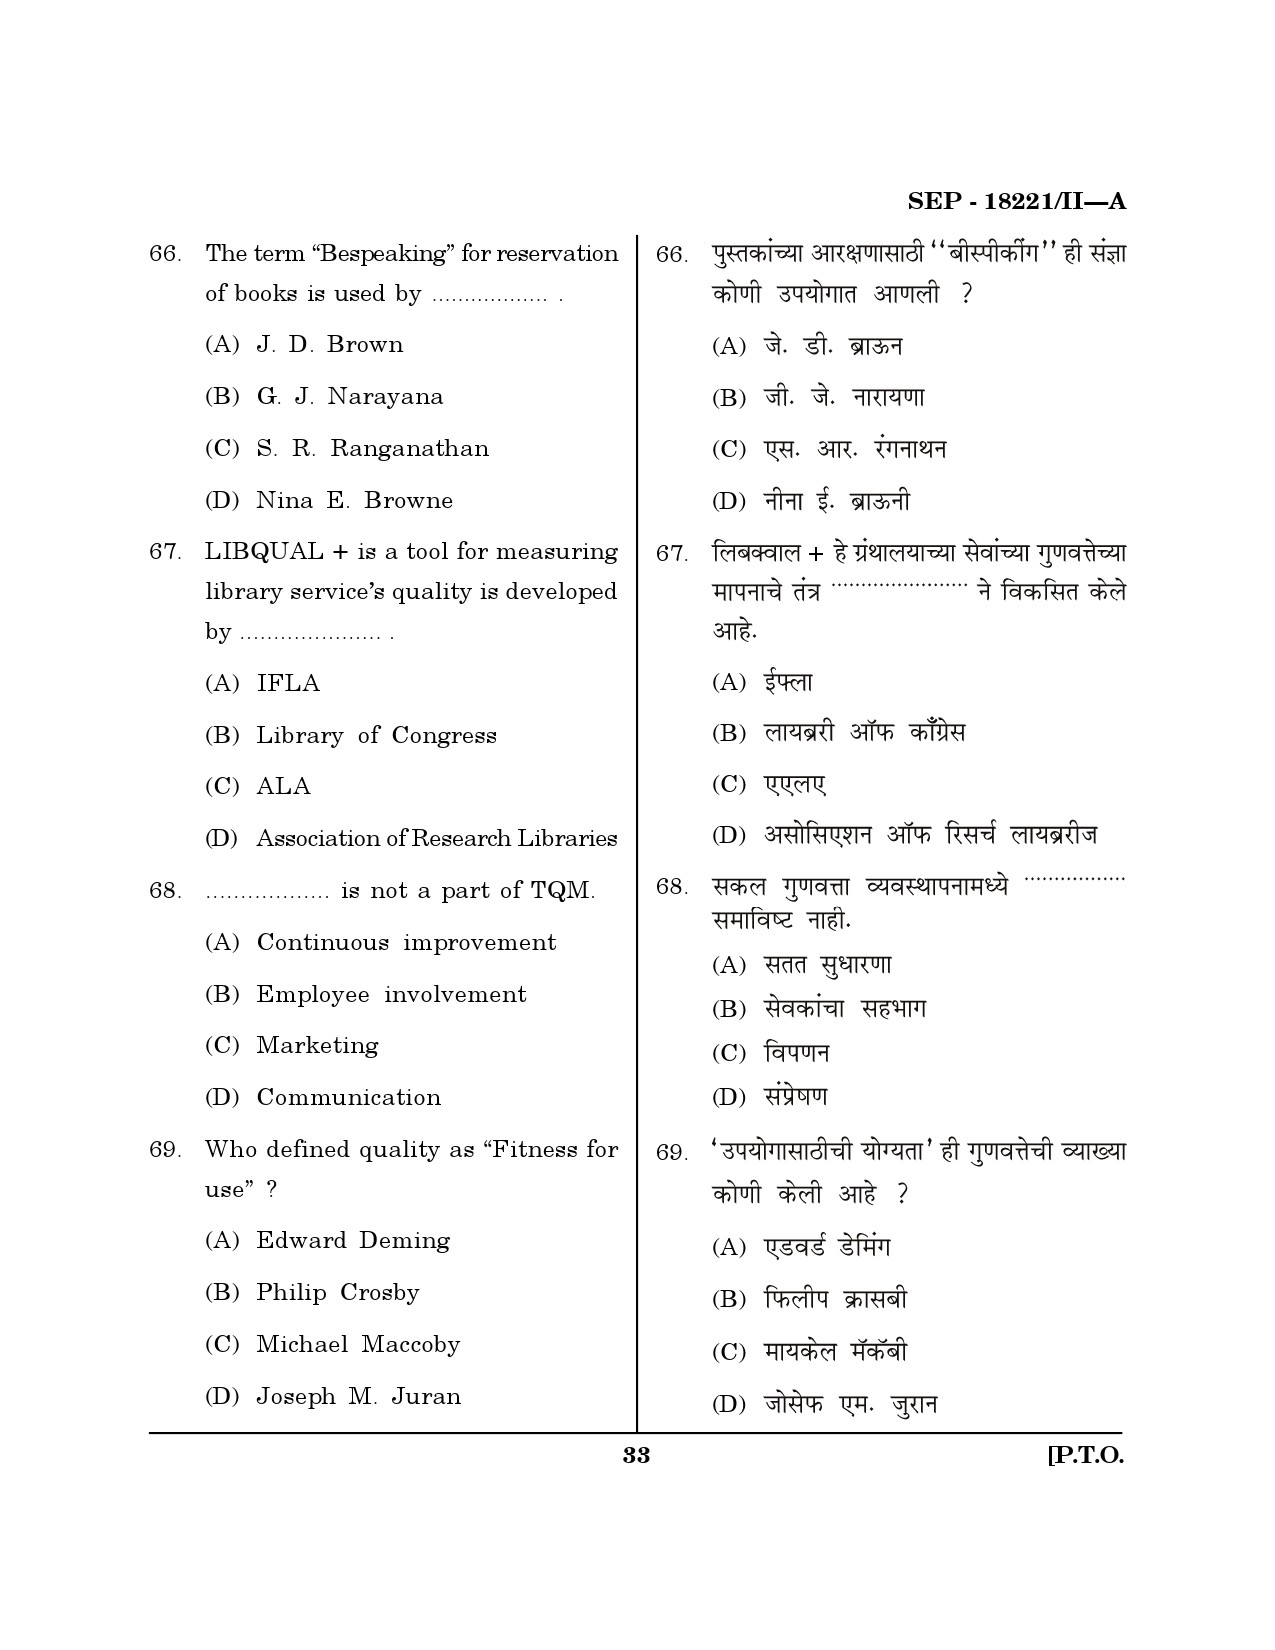 Maharashtra SET Library Information Science Exam Question Paper September 2021 32